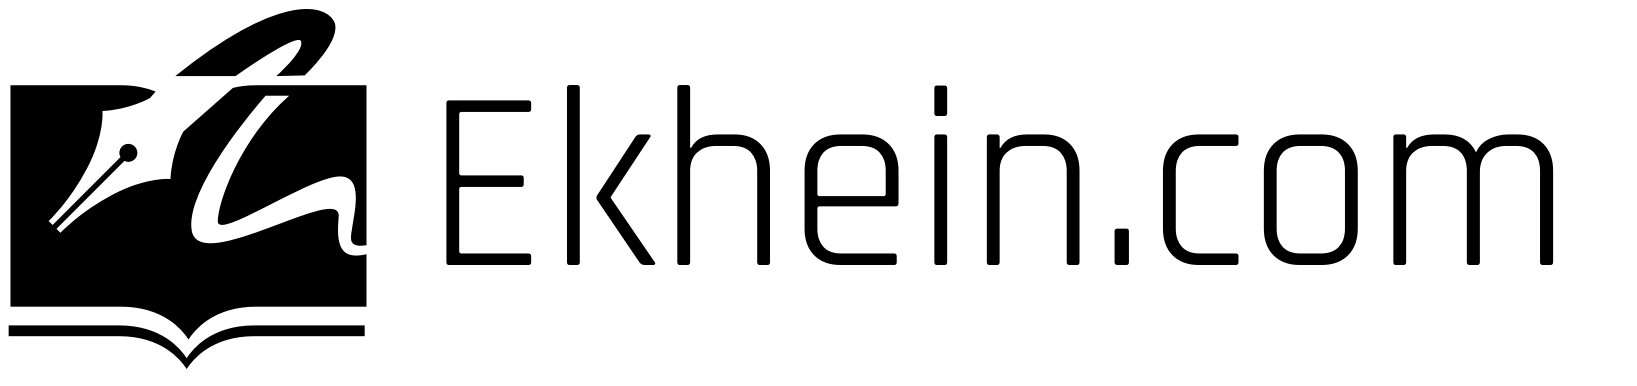 Ekhein logo